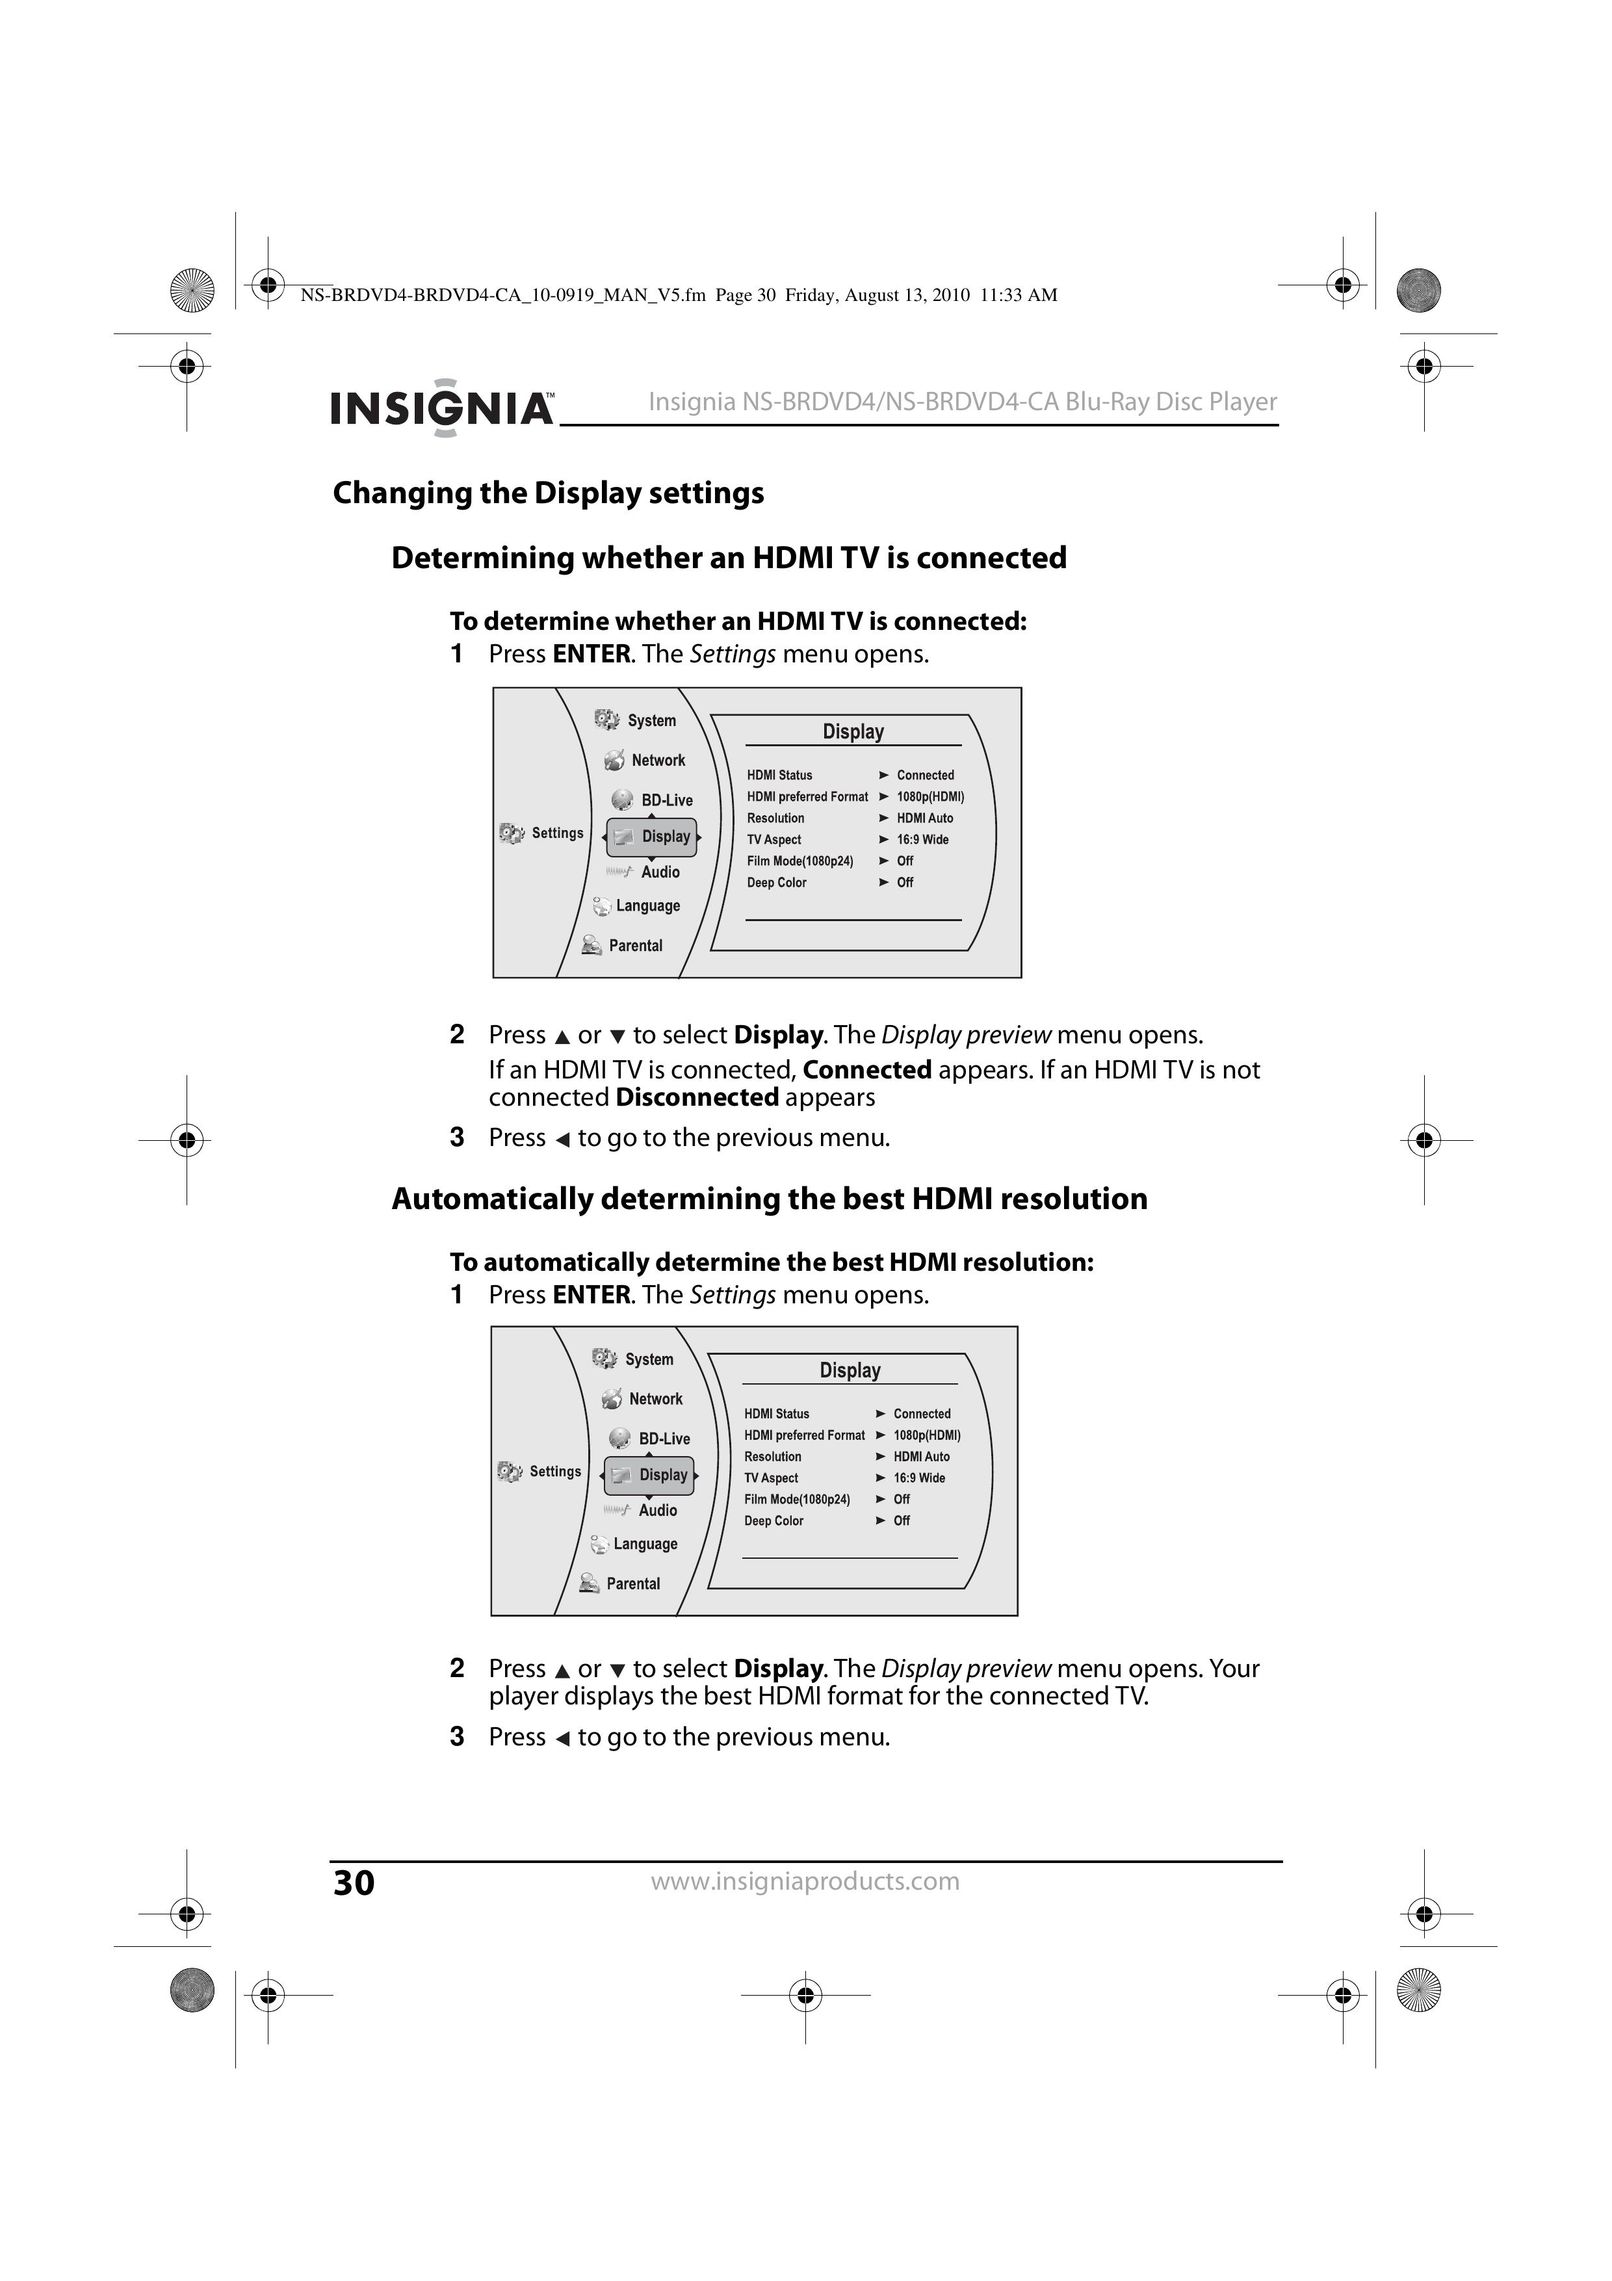 Insignia NS-BRDVD4 Blu-ray Player User Manual (Page 30)